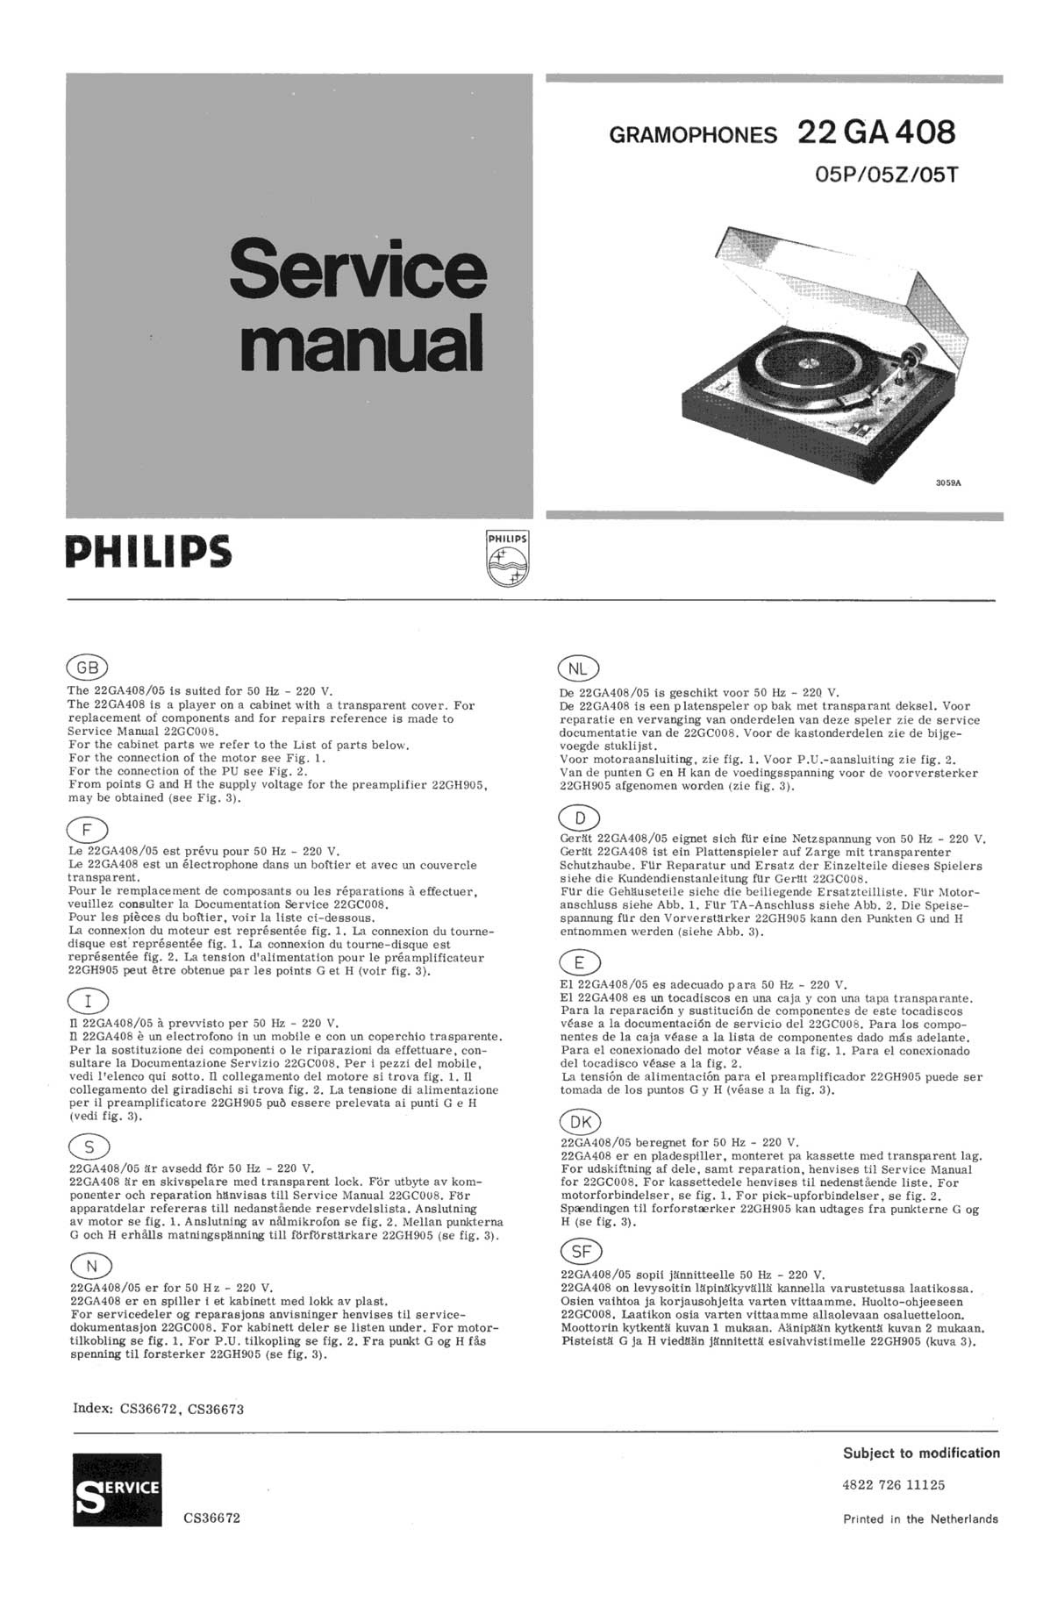 Philips Ga 408 Service Manual